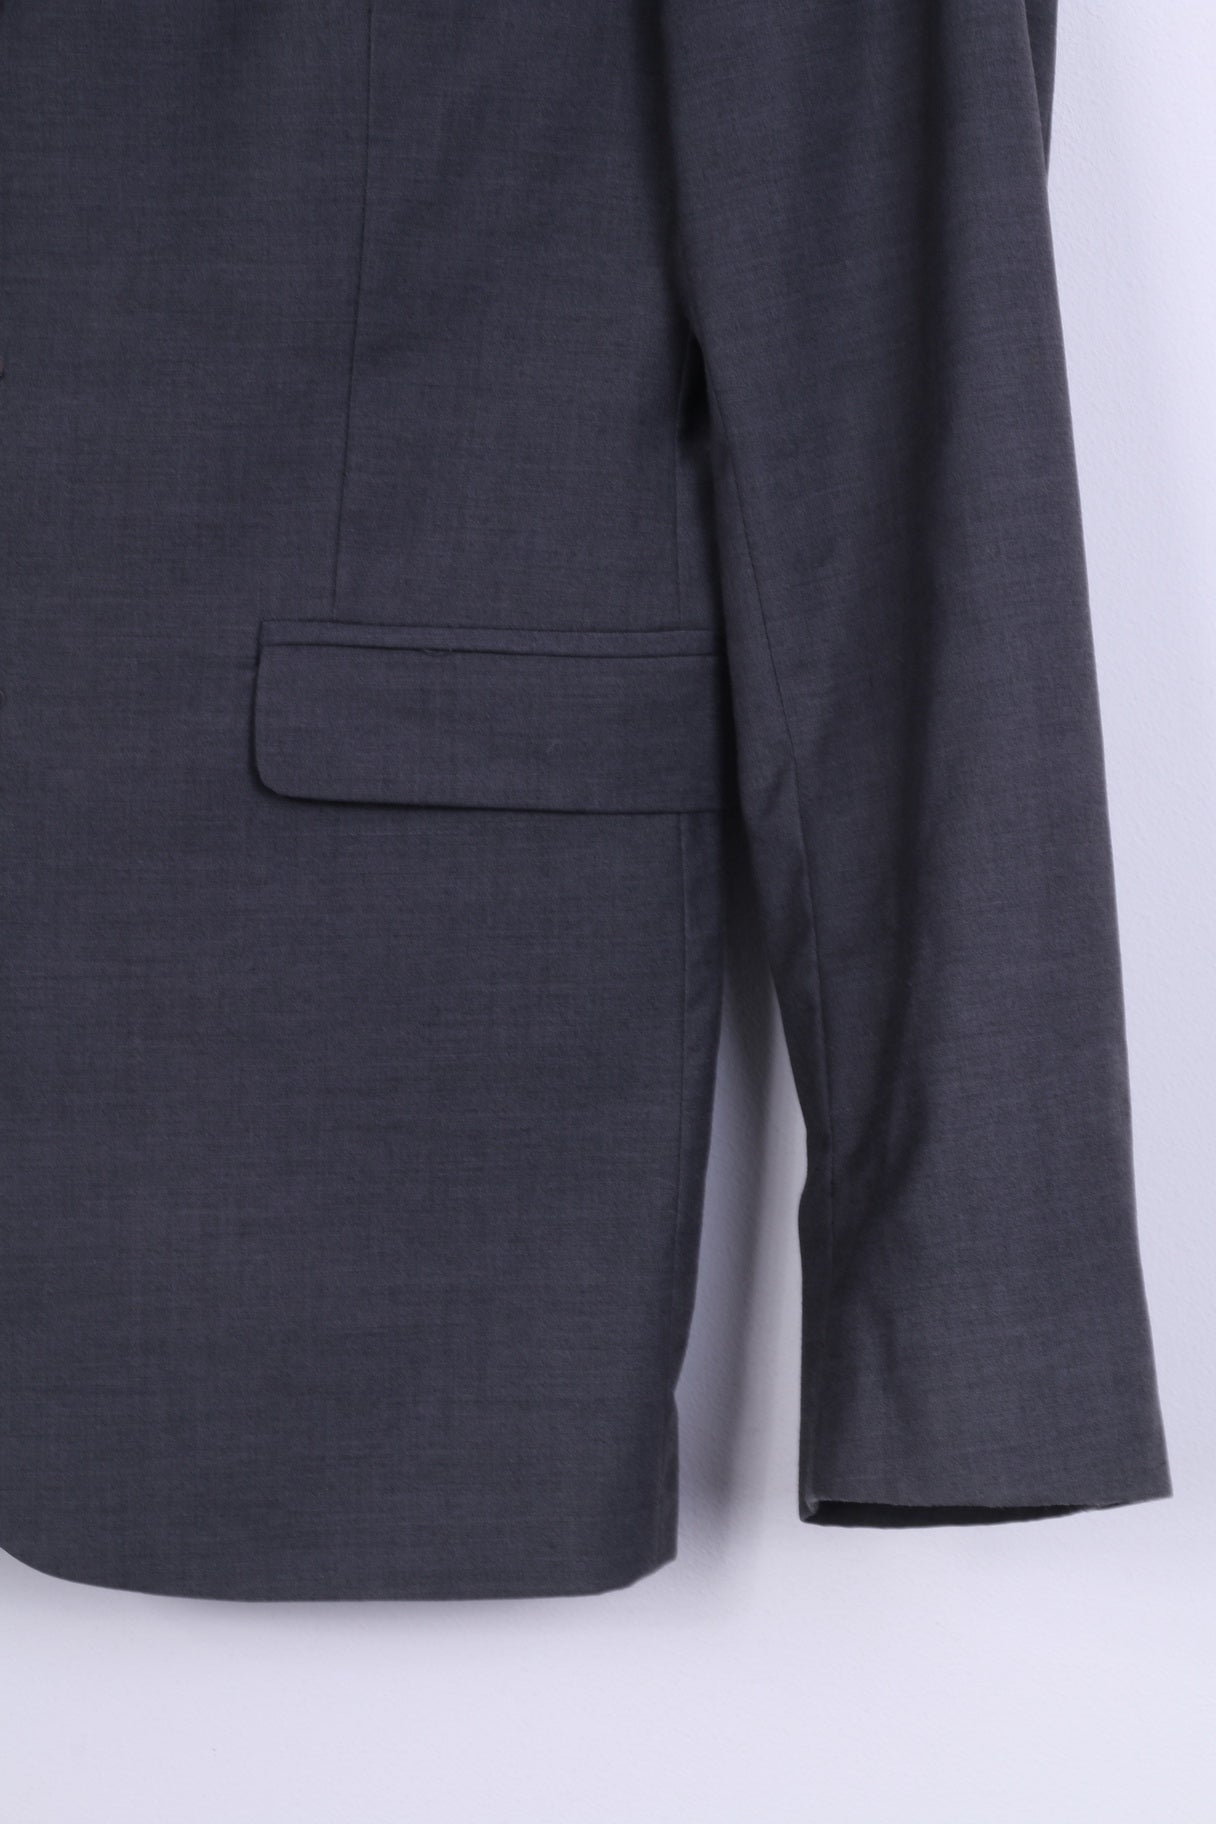 H&M Mens 44 34R S Blazer Grey Regaular Fit Jacket Wool Single Breasted